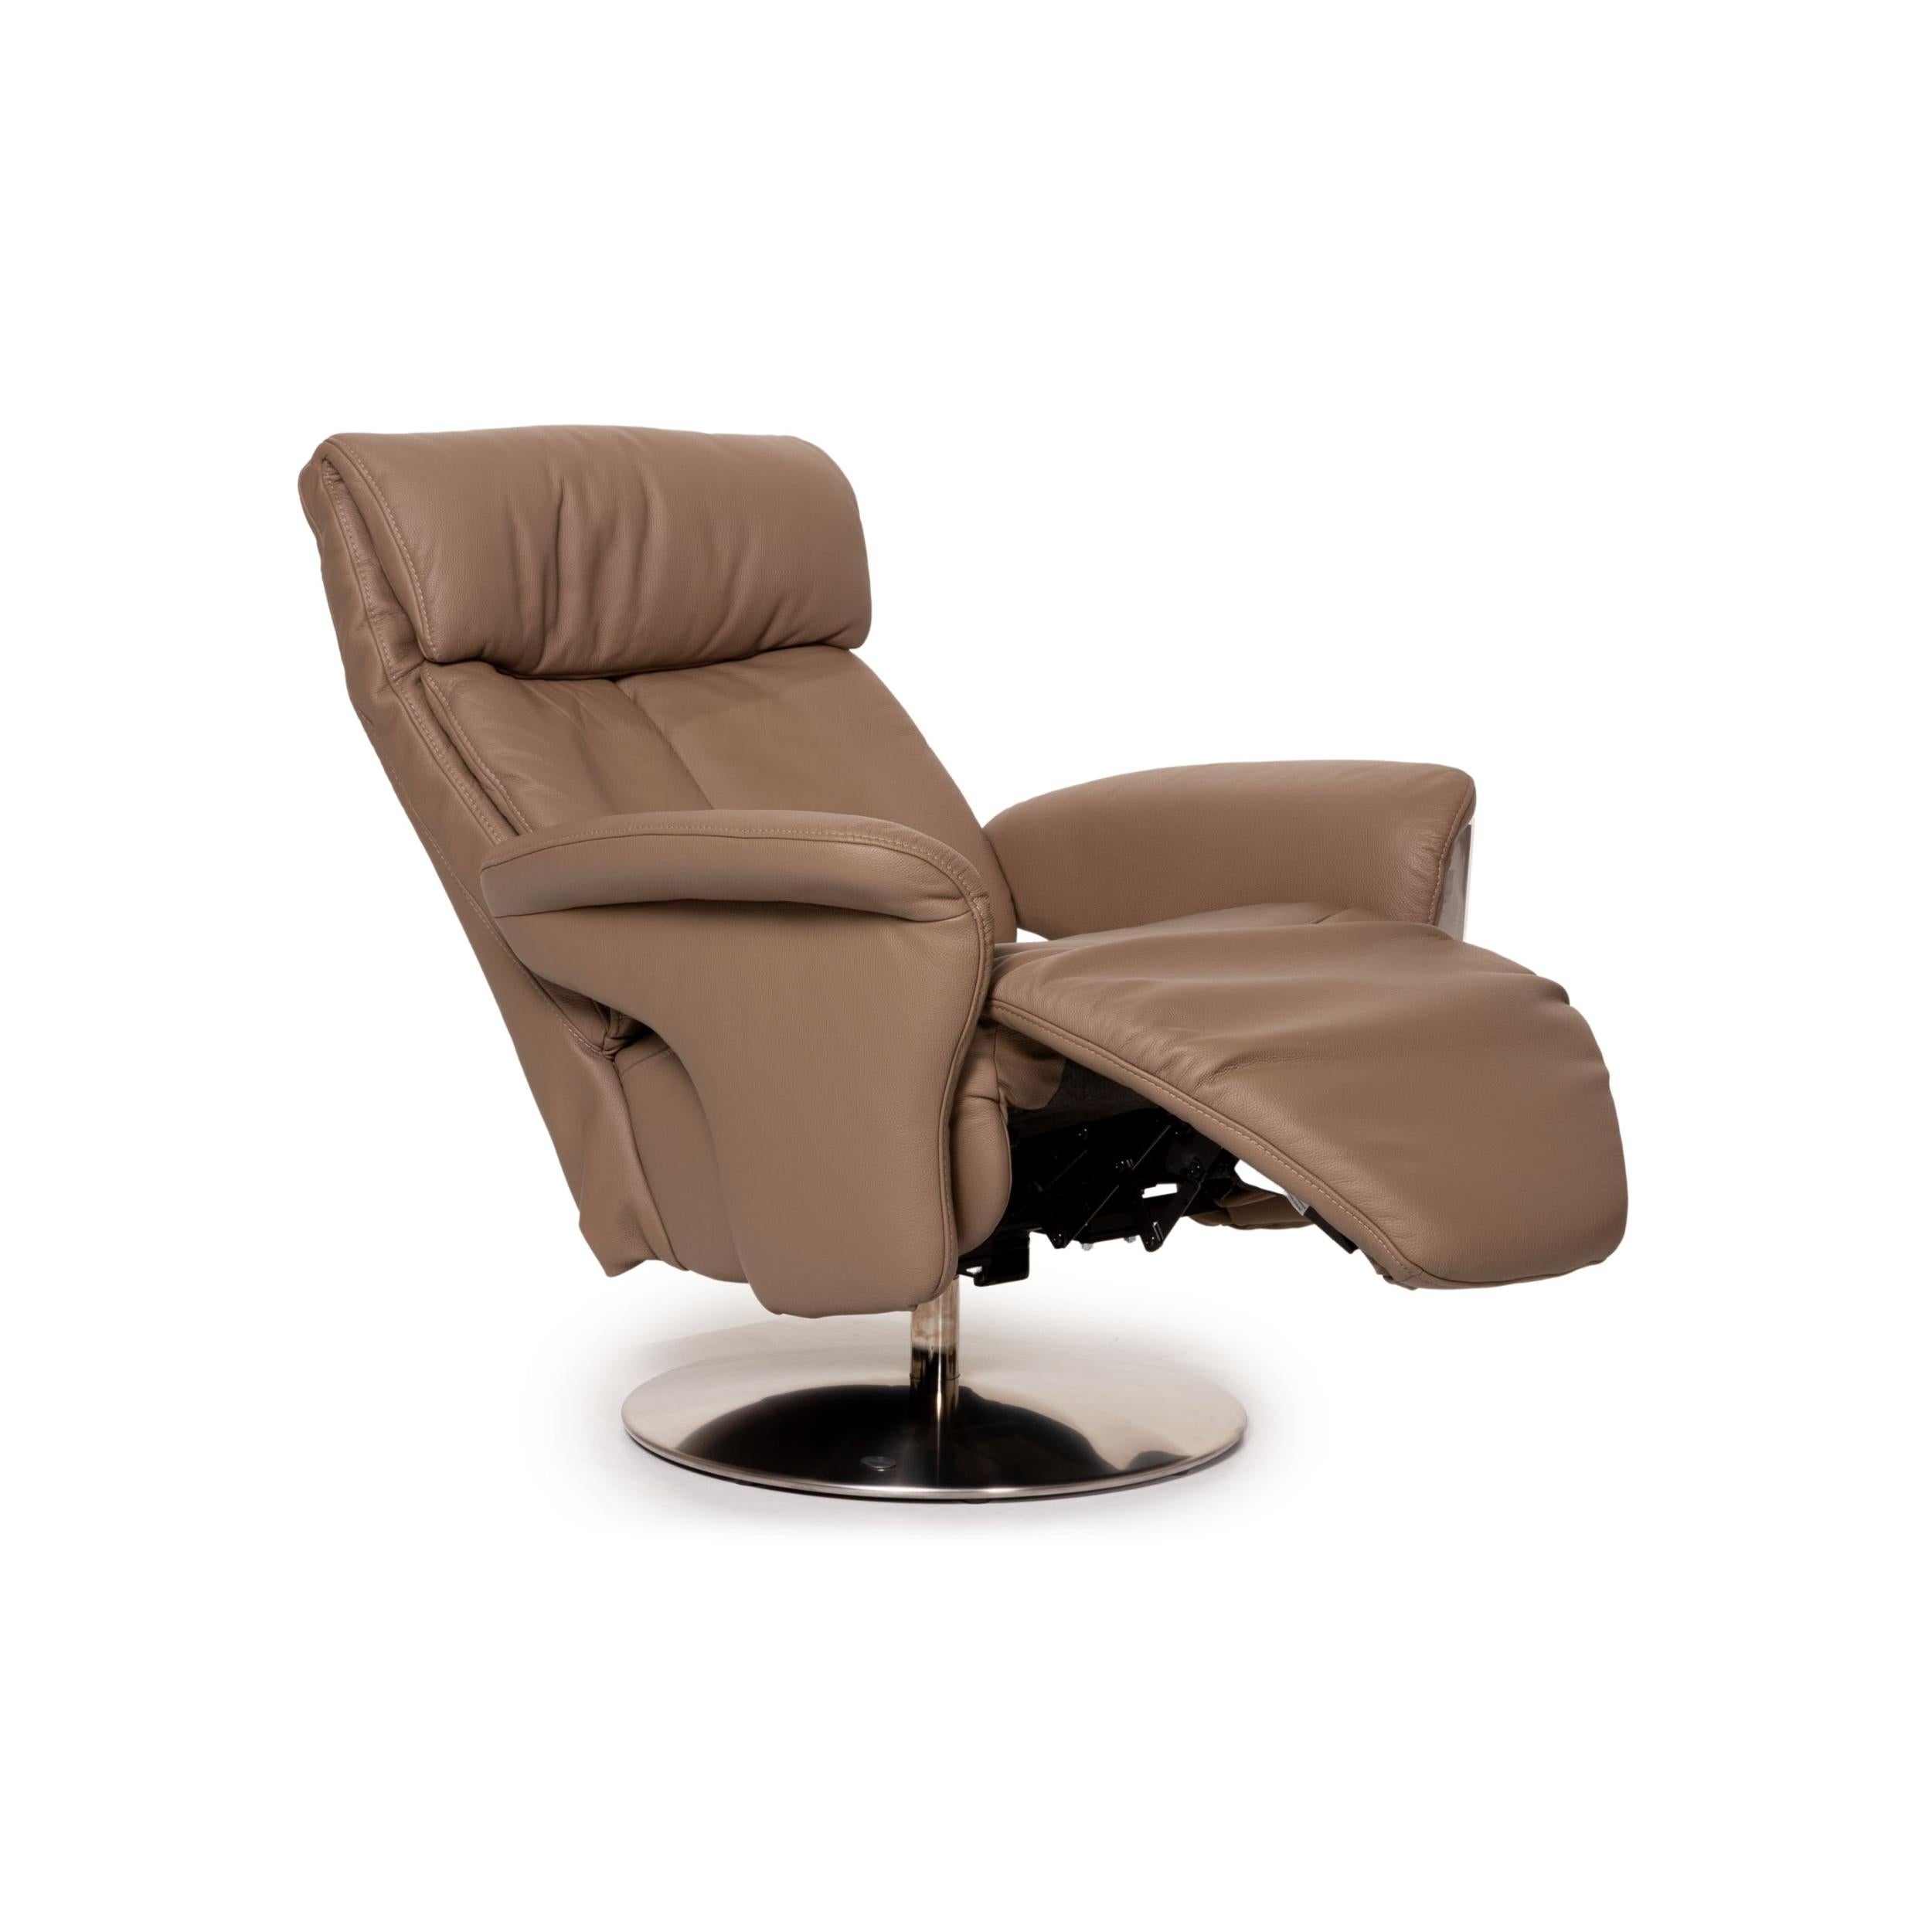 Modern Himolla 7227 Leather Armchair Brown Relaxation Function Function Relaxation For Sale